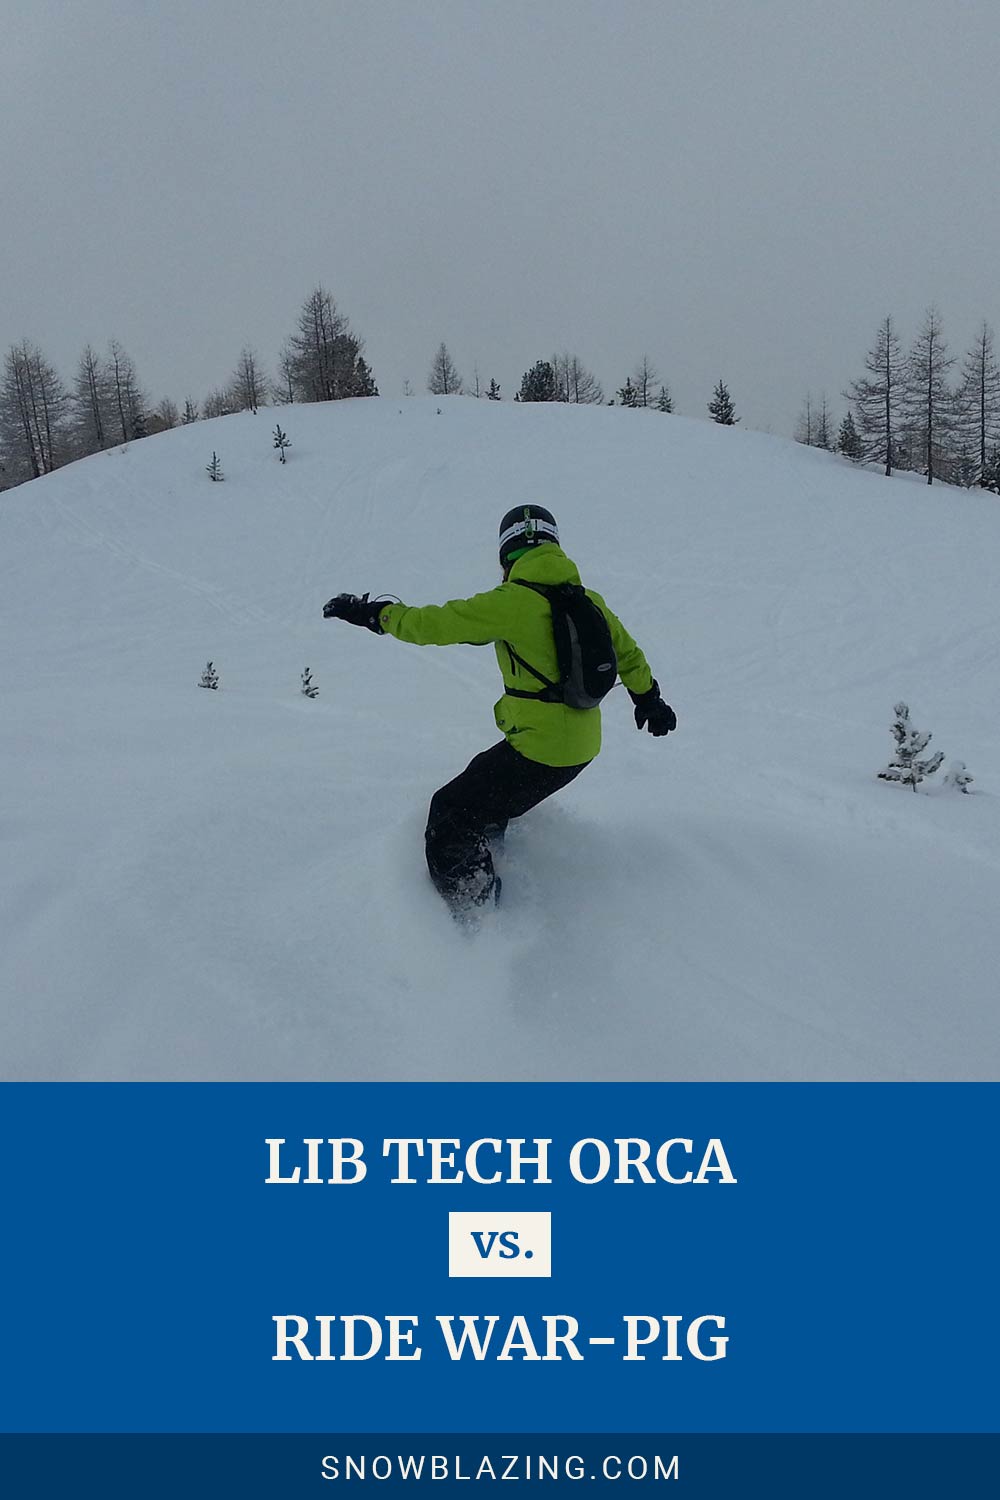 Person in neon green jacket snowboarding - Lib Tech Orca Vs Ride War-Pig